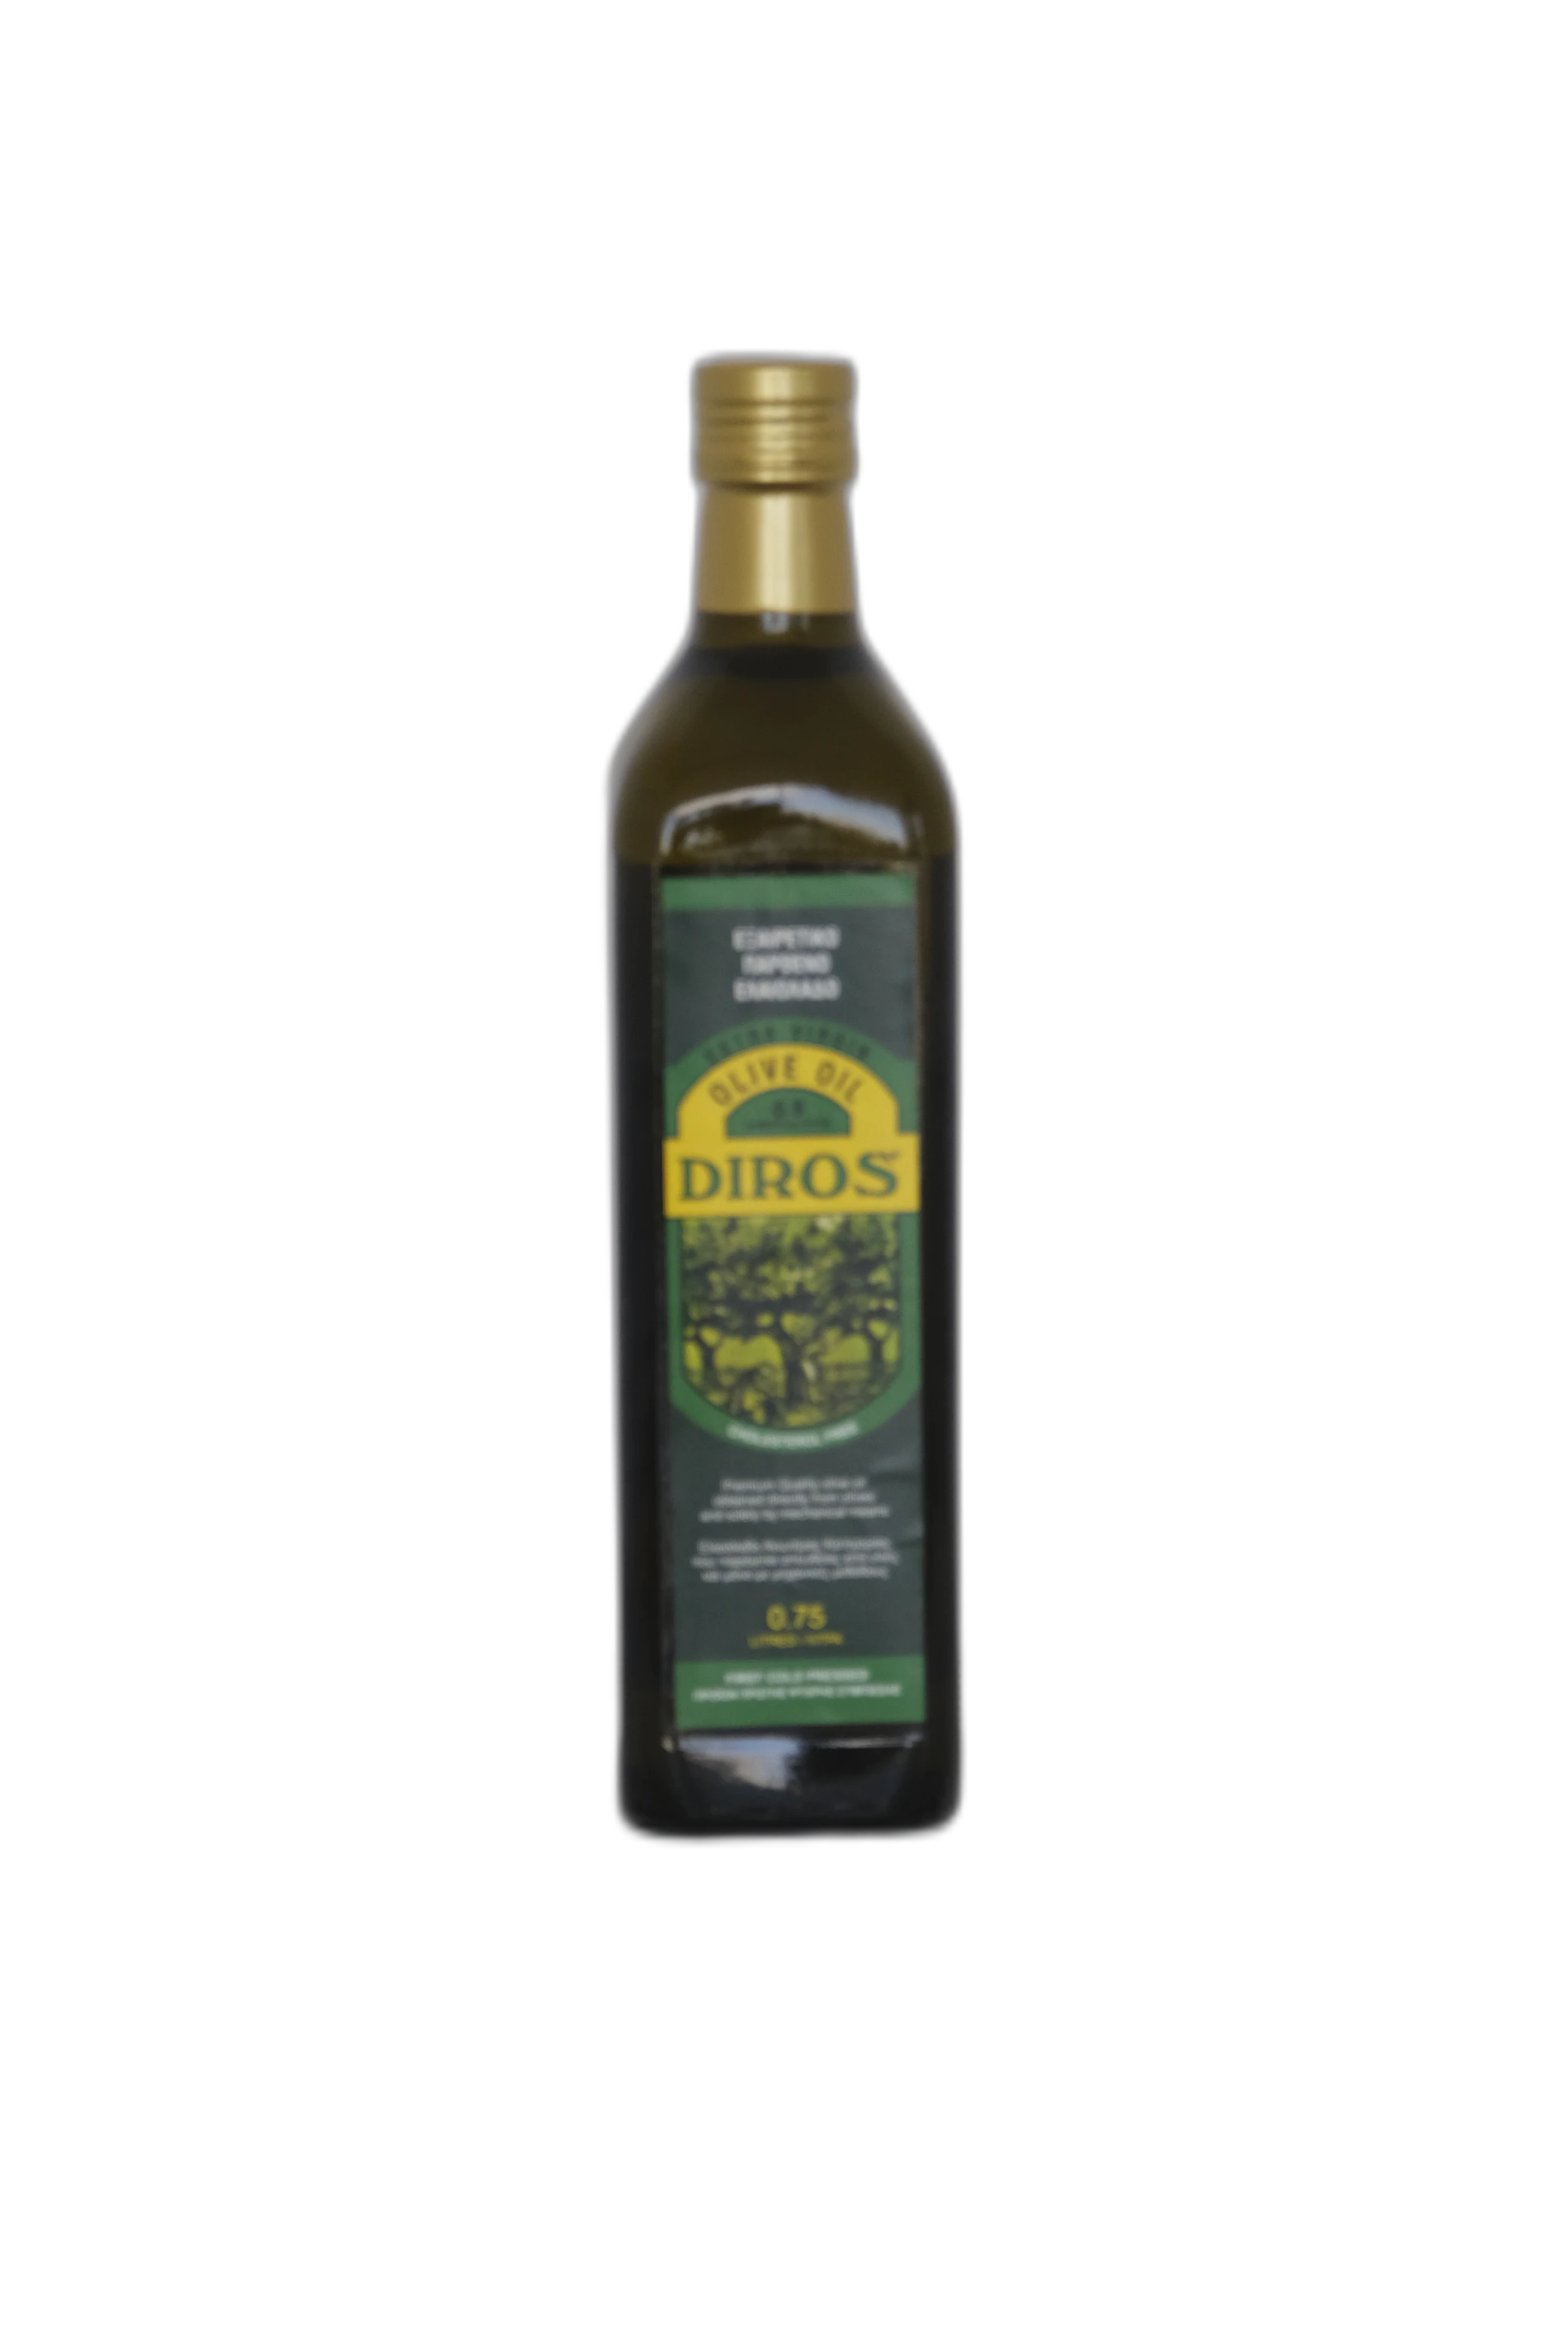 Diros Extra Virgin Olive Oil 750ml